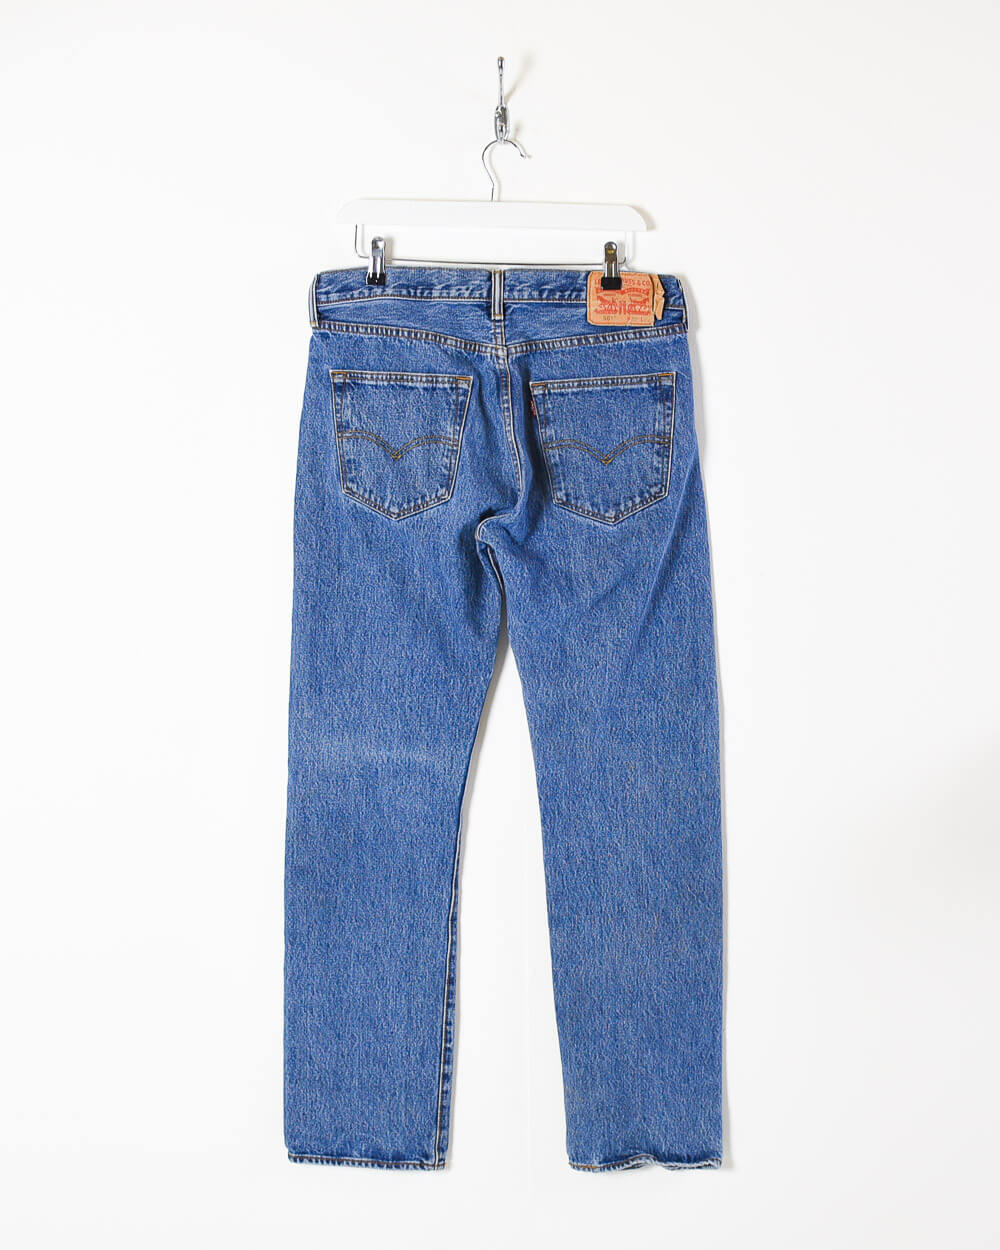 Blue Levi Strauss & Co Jeans - W32 L32